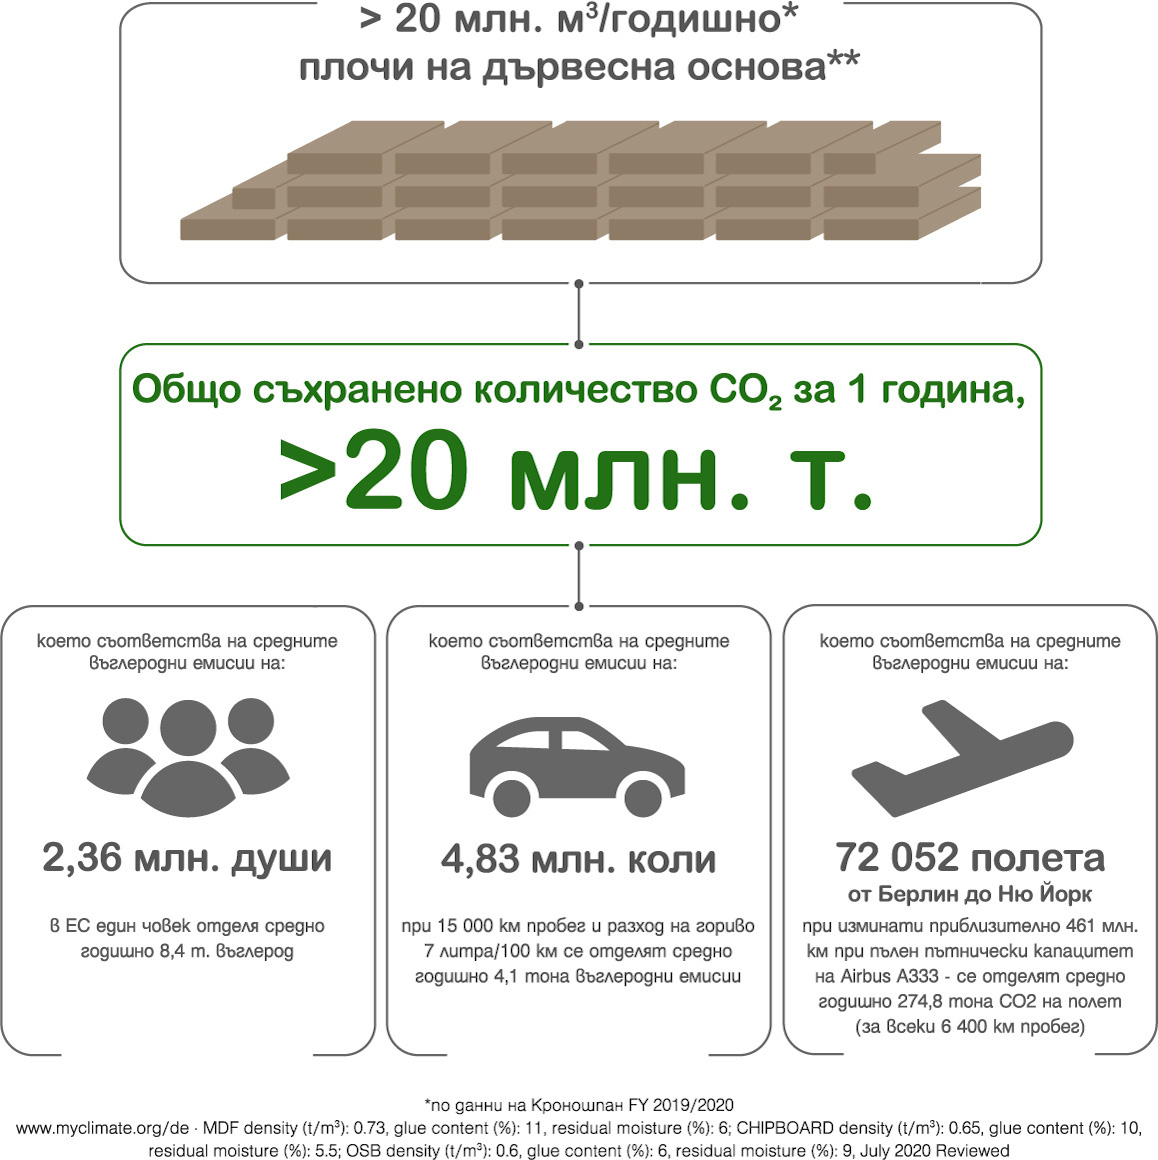 Total CO2 storage: 20Mt